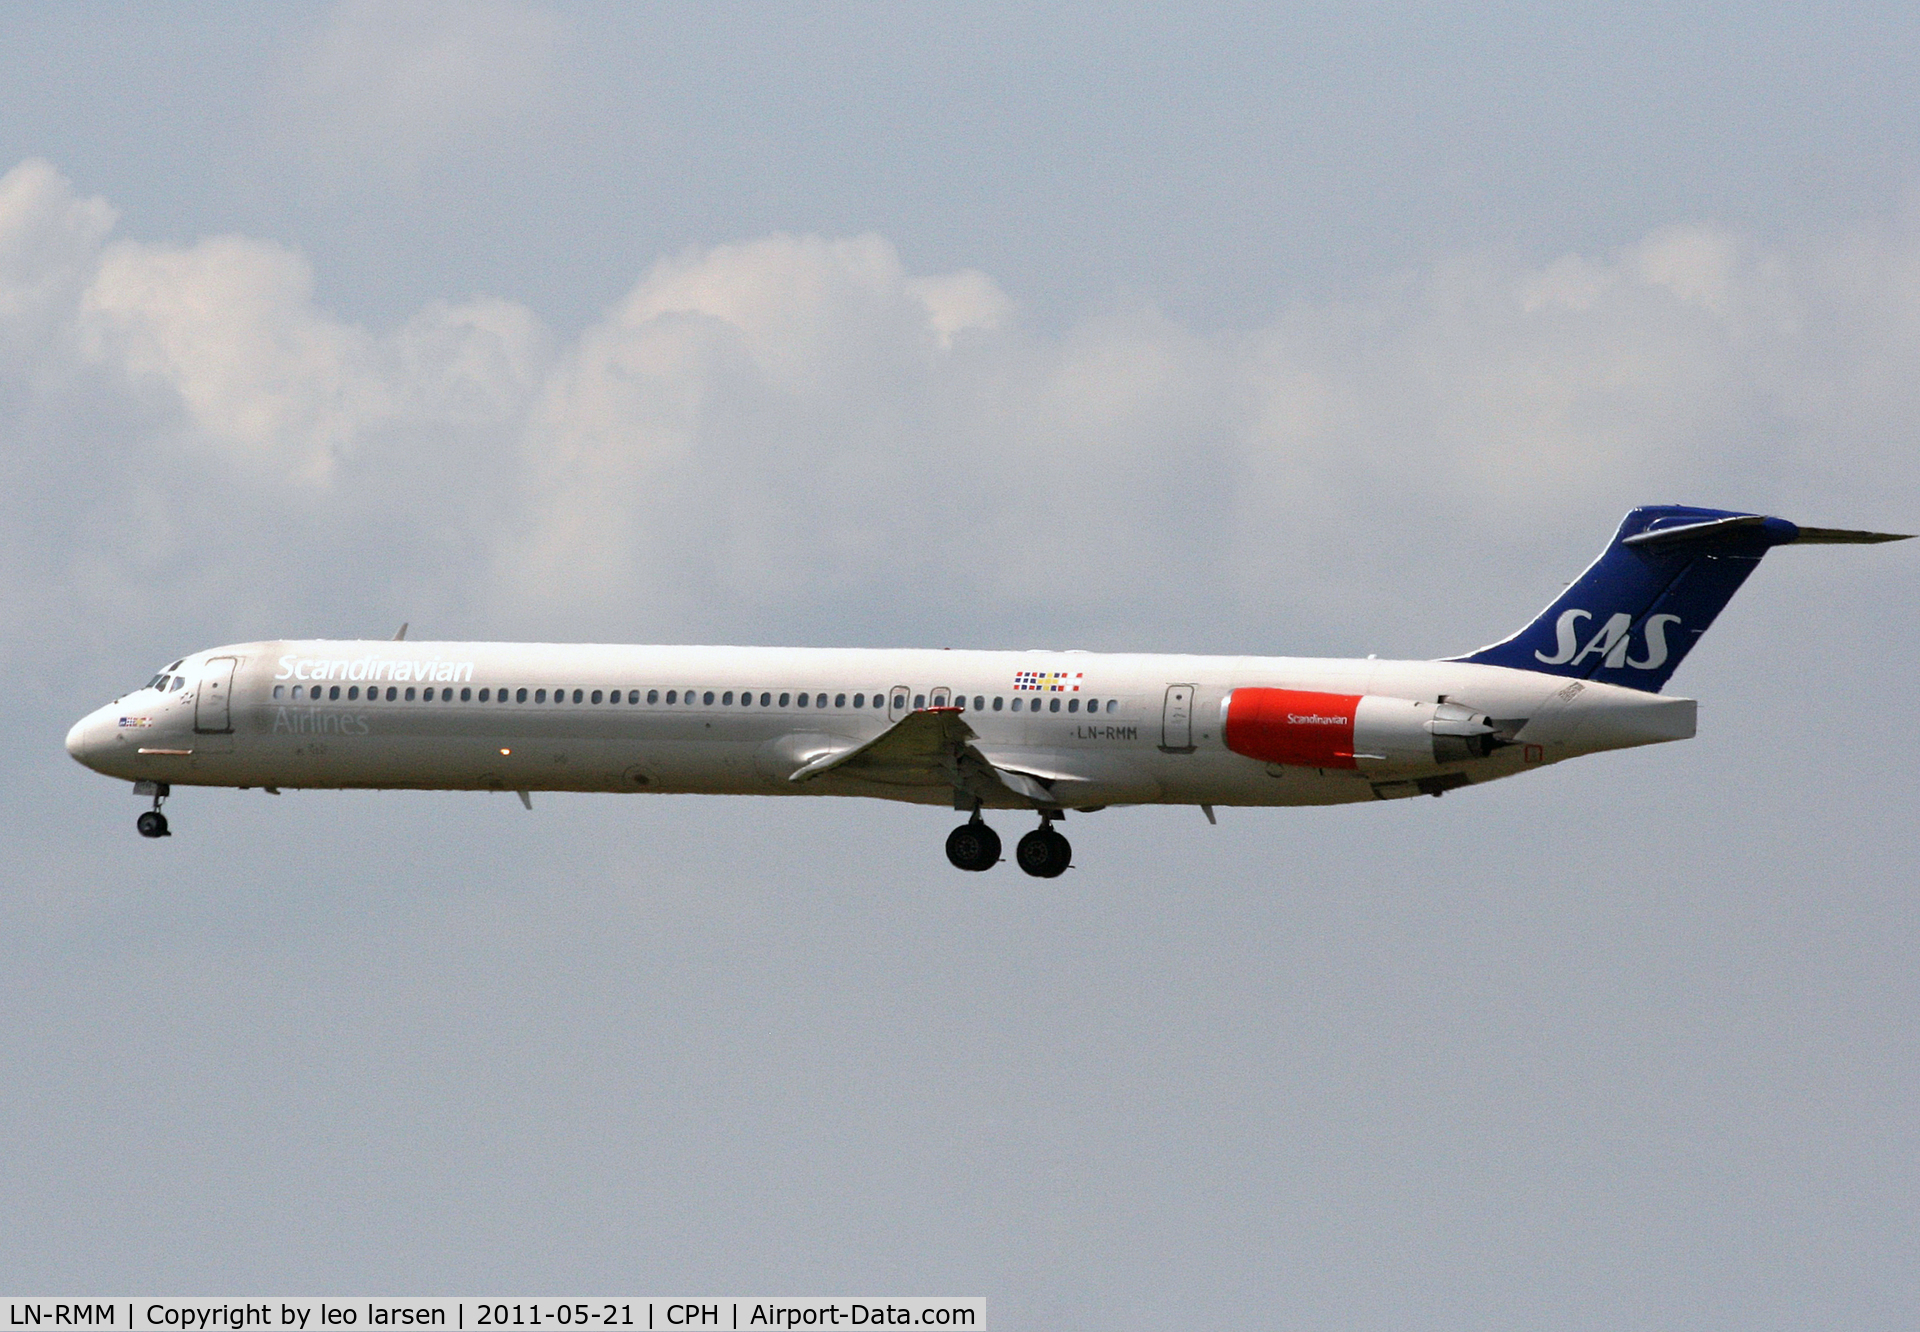 LN-RMM, 1991 McDonnell Douglas MD-81 (DC-9-81) C/N 53005, Copenhagen 21.5.11